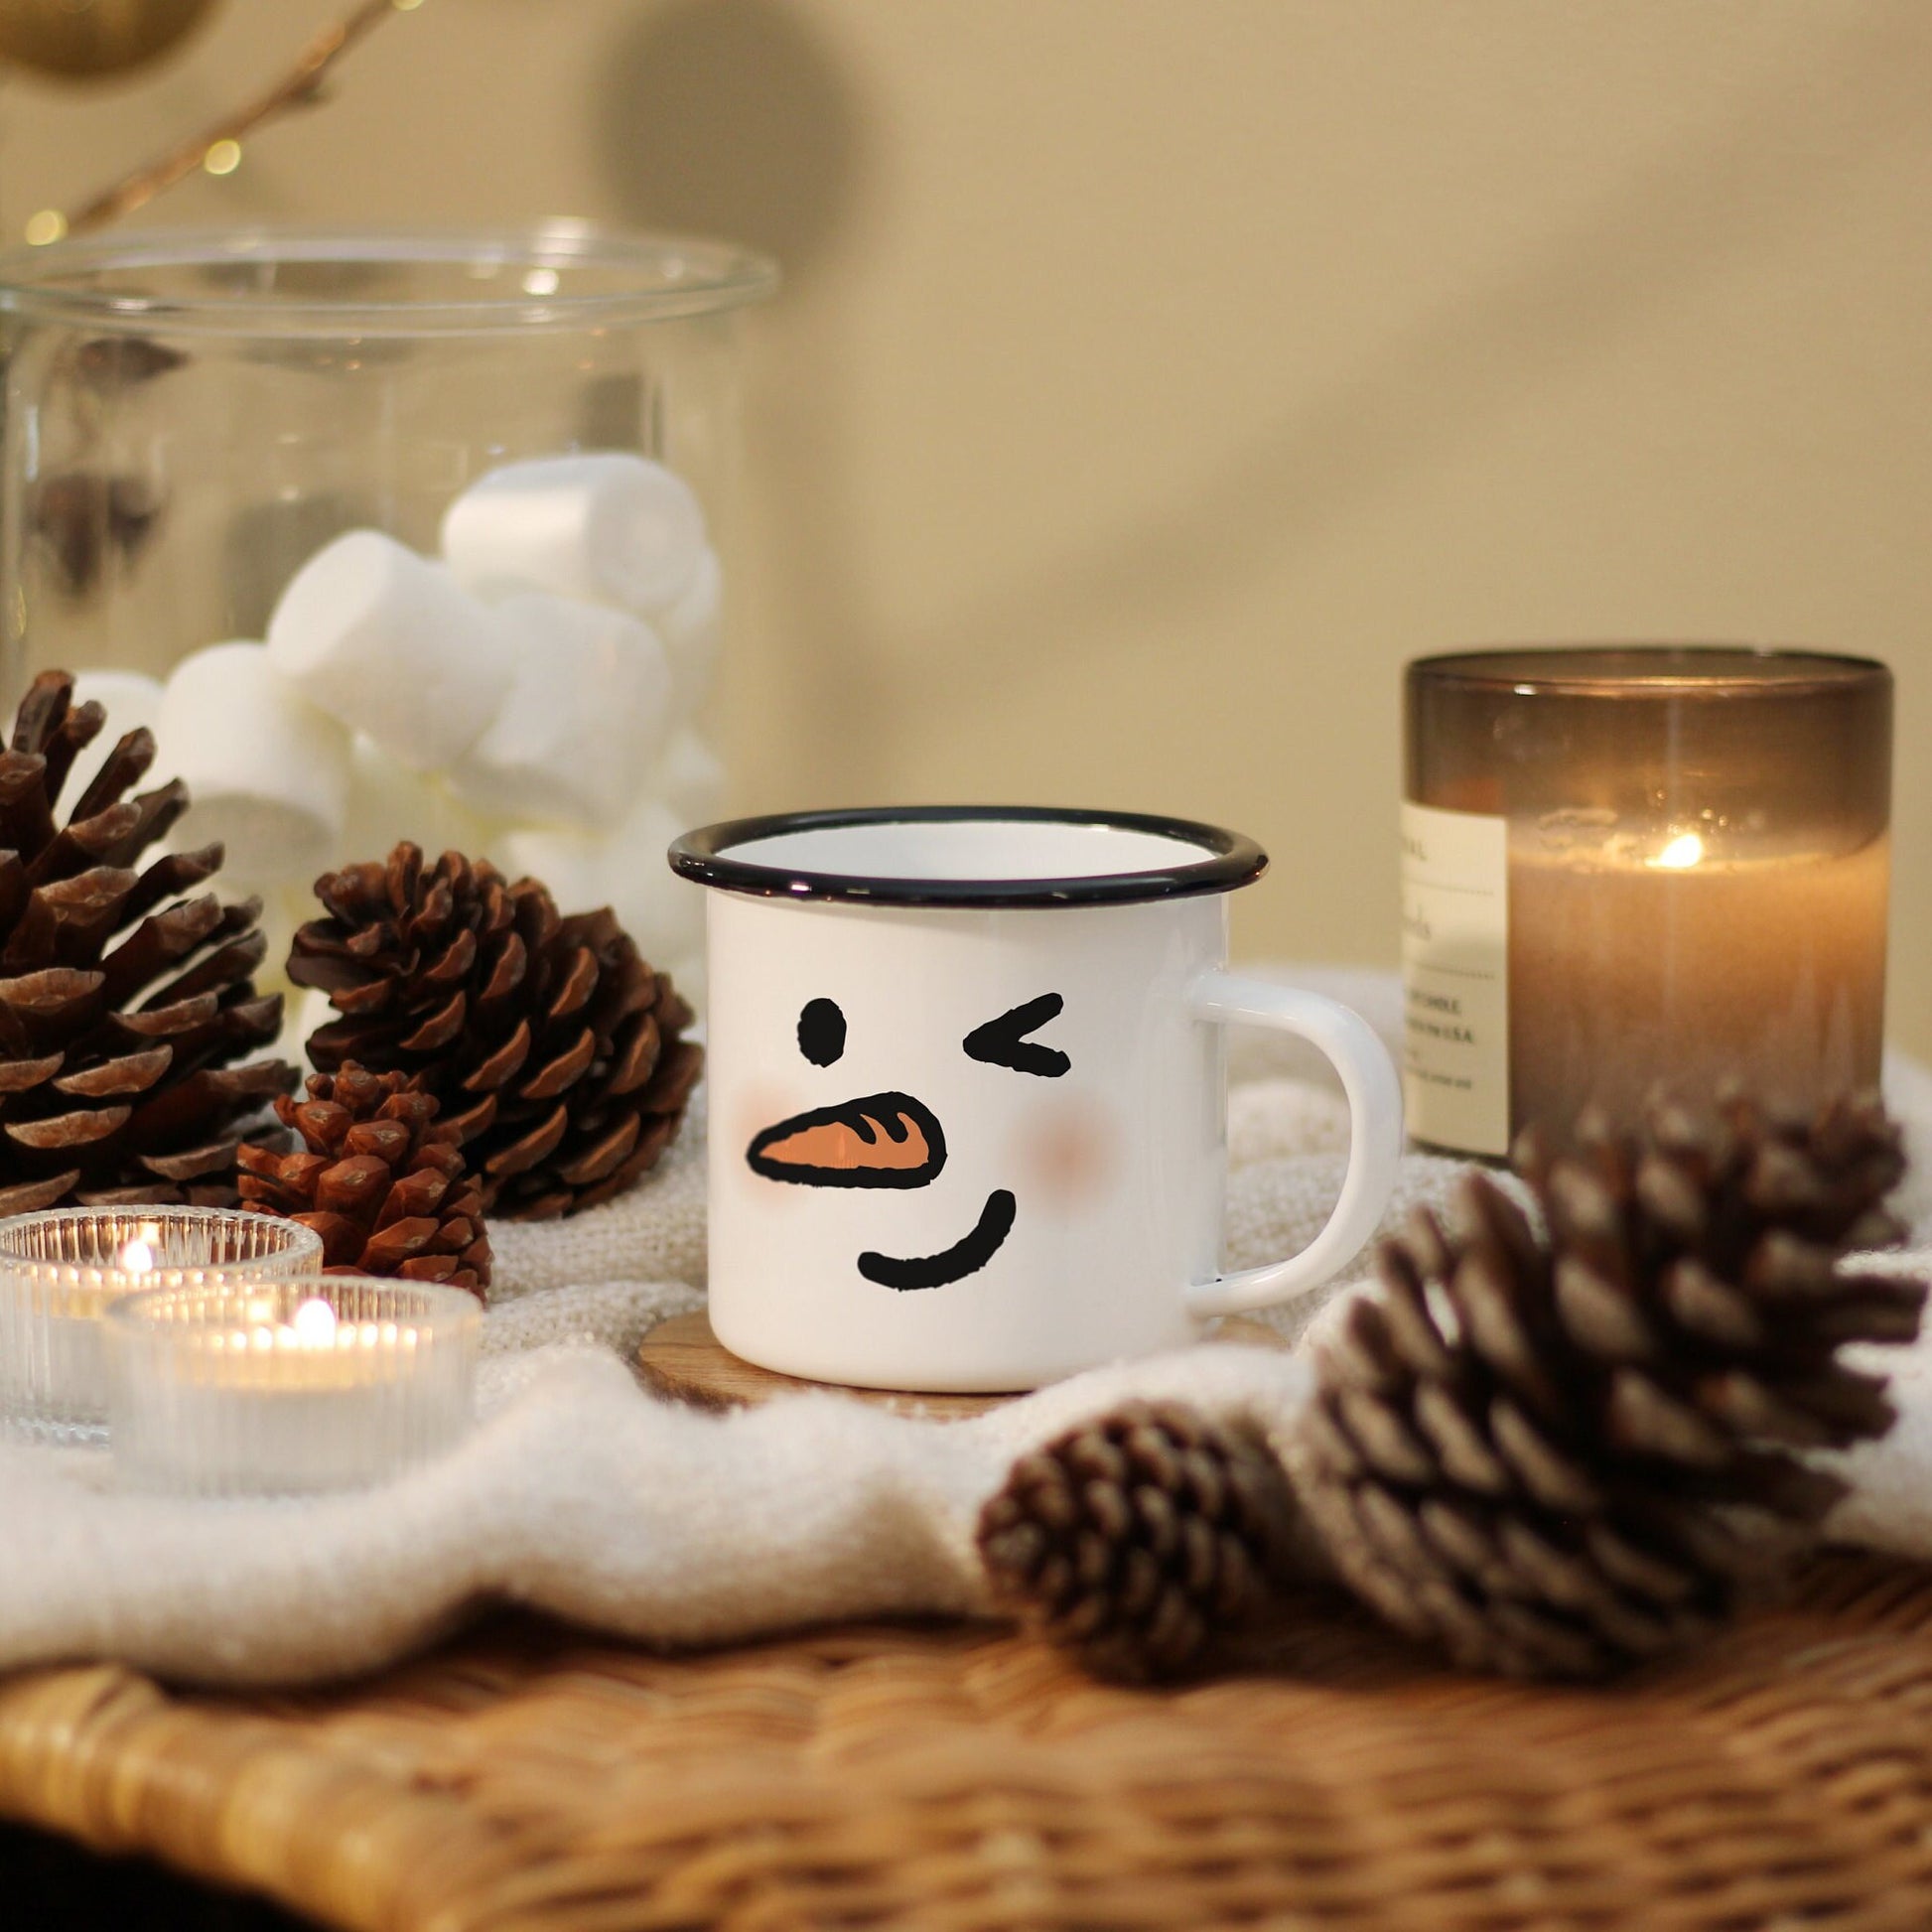 Williams Sonoma Snowman Hot Chocolate Mugs with Kuwait